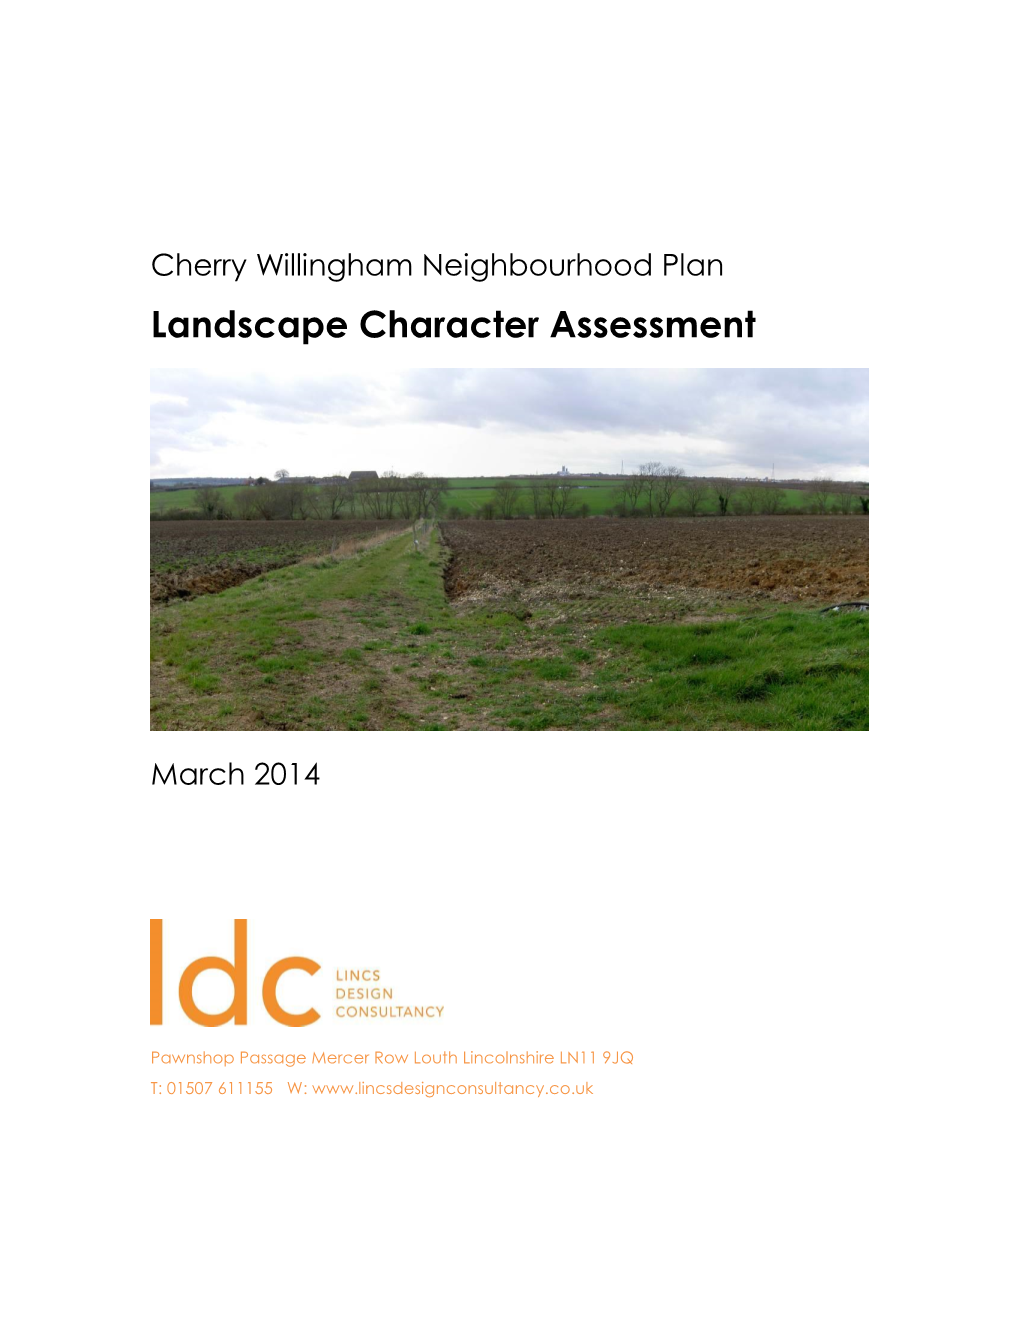 Cherry Willingham Neighbourhood Plan: Landscape Character